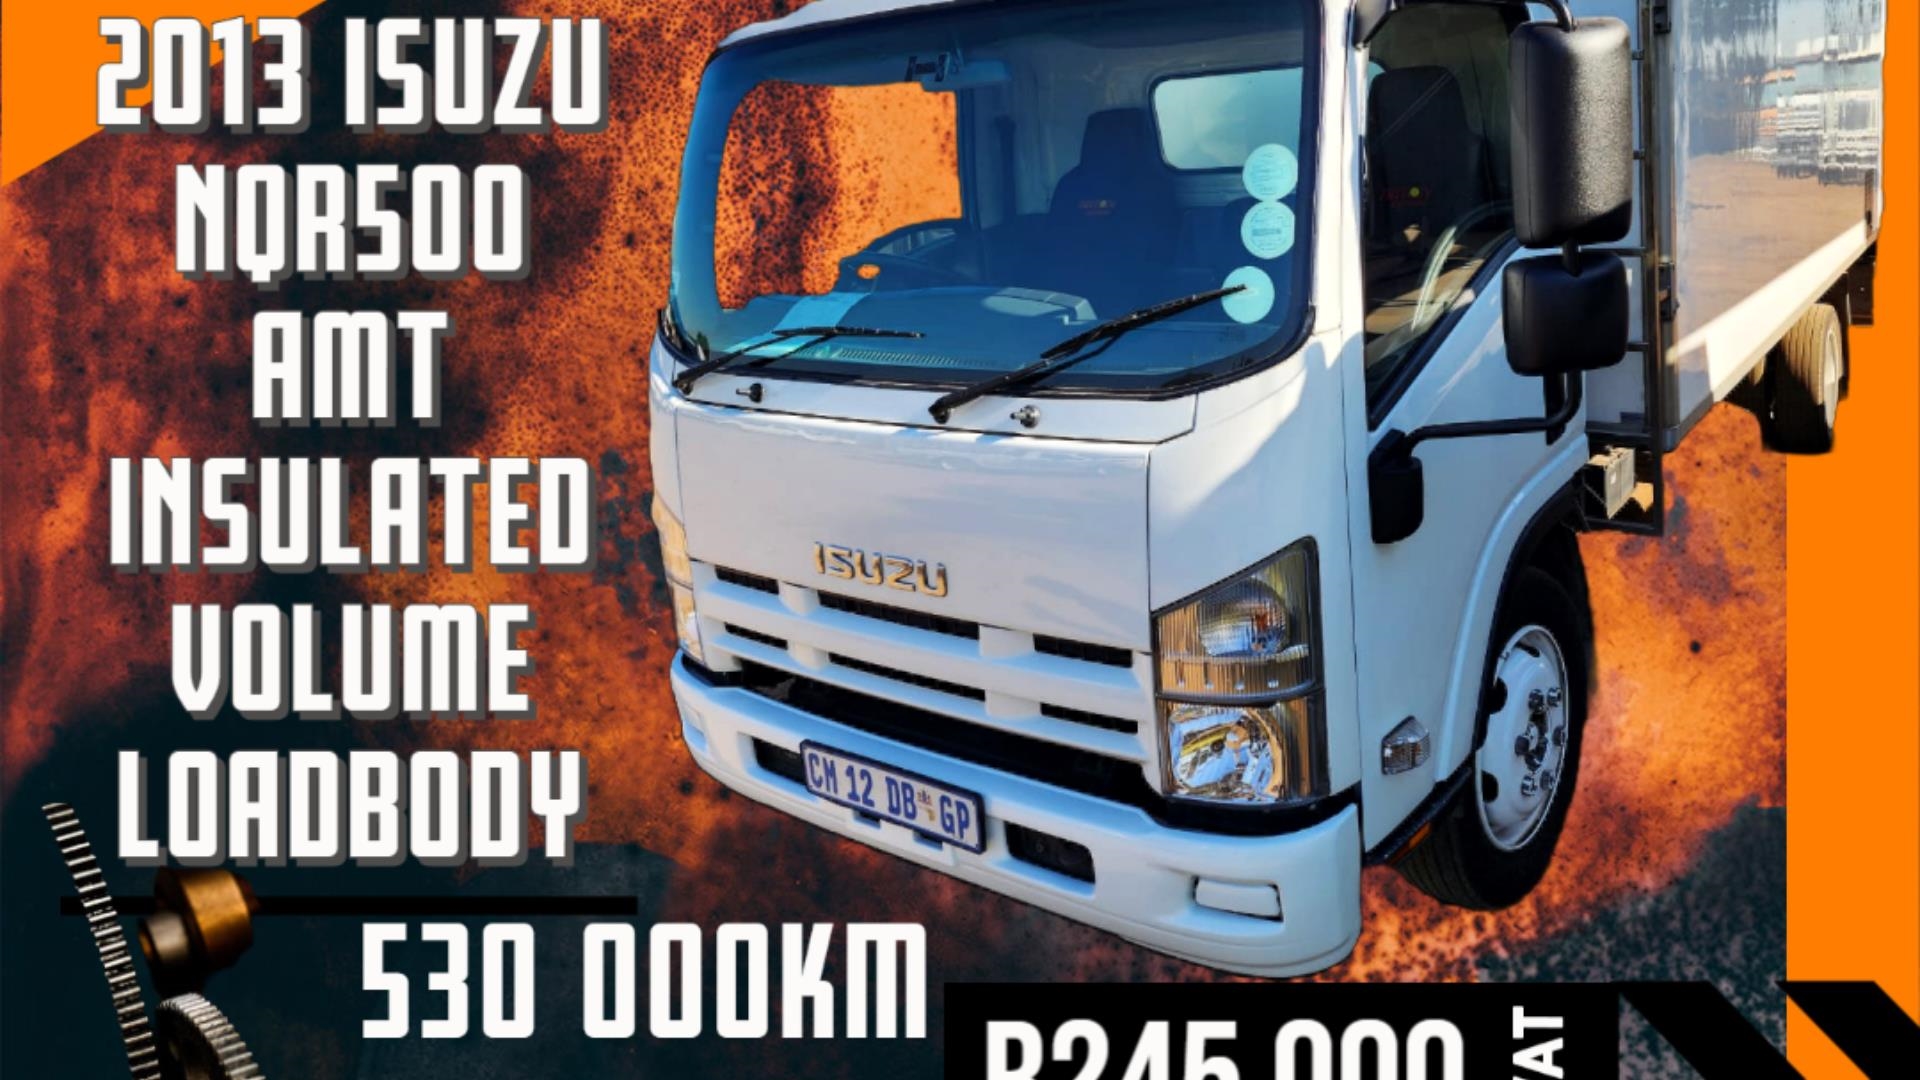 Isuzu Box trucks Isuzu NQR500 AMT. Insulated Volume Loadbody 2013 for sale by Procom Commercial | Truck & Trailer Marketplace